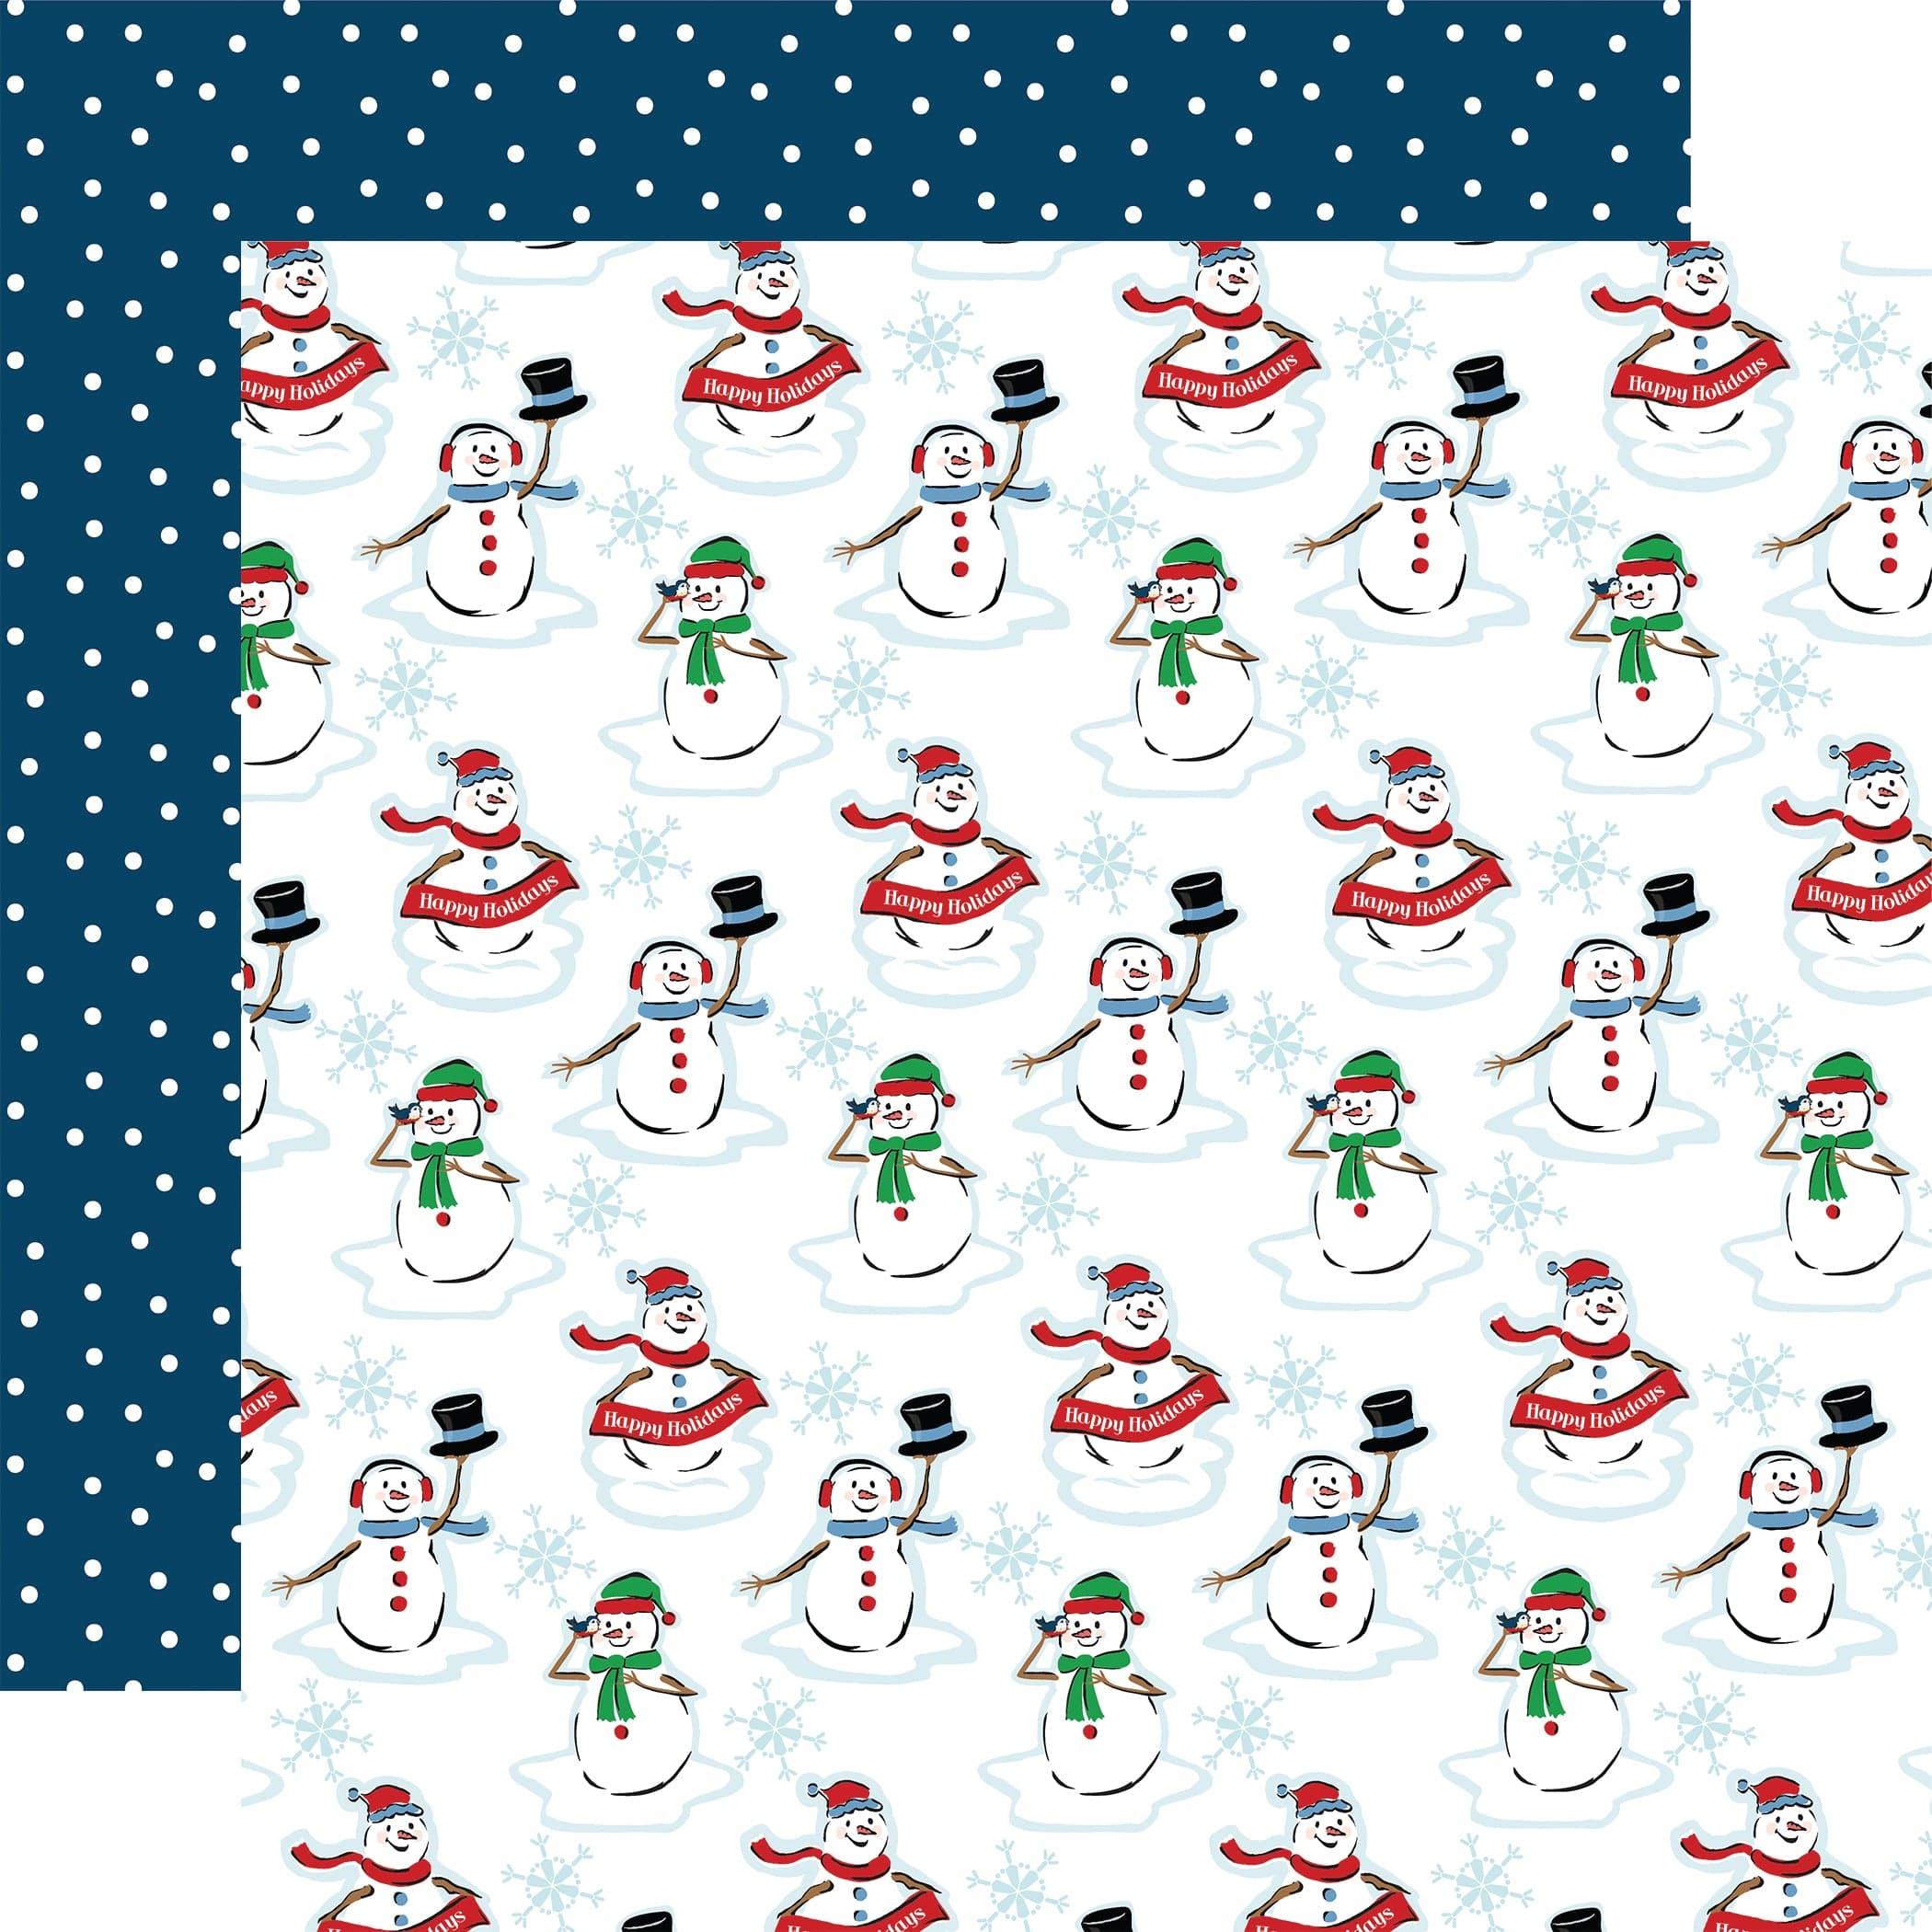 Creative Shapes etc. Christmas Snow Designer Paper - 50 Sheet Package